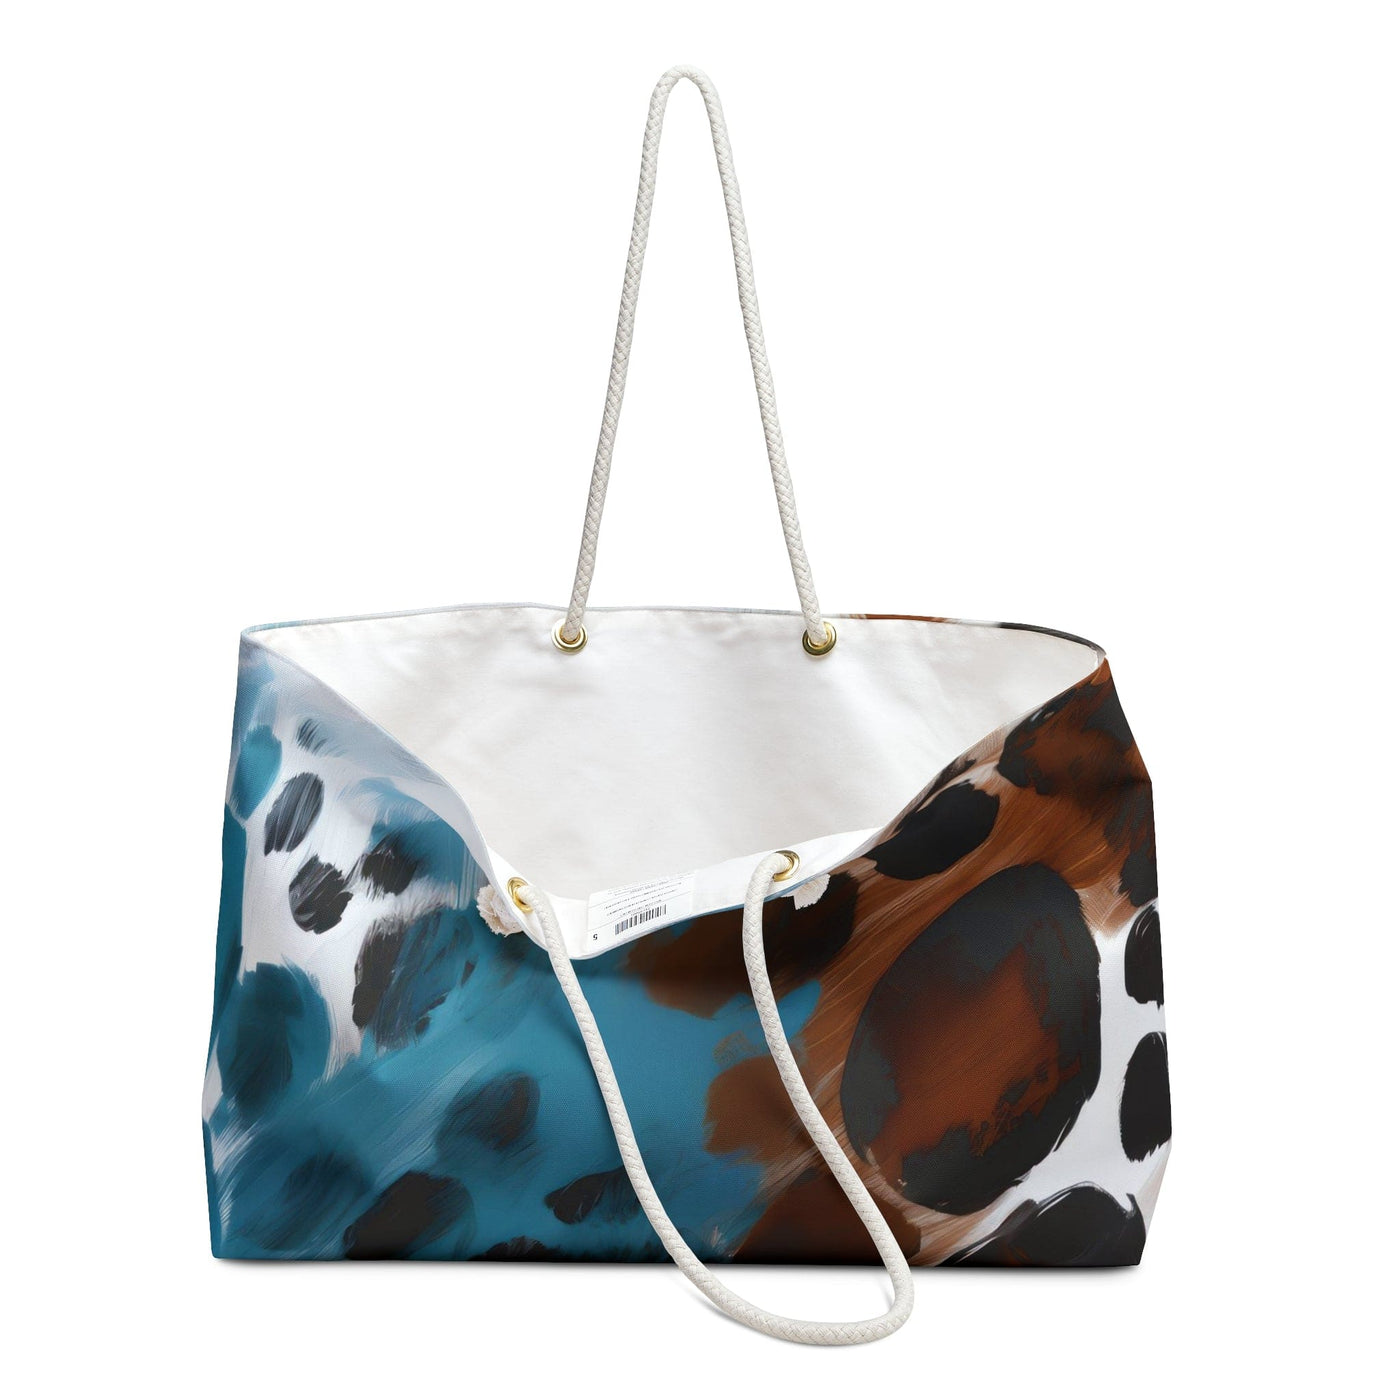 Weekender Tote Bag Rustic Blue And Brown Spotted Pattern - Bags | Tote Bags